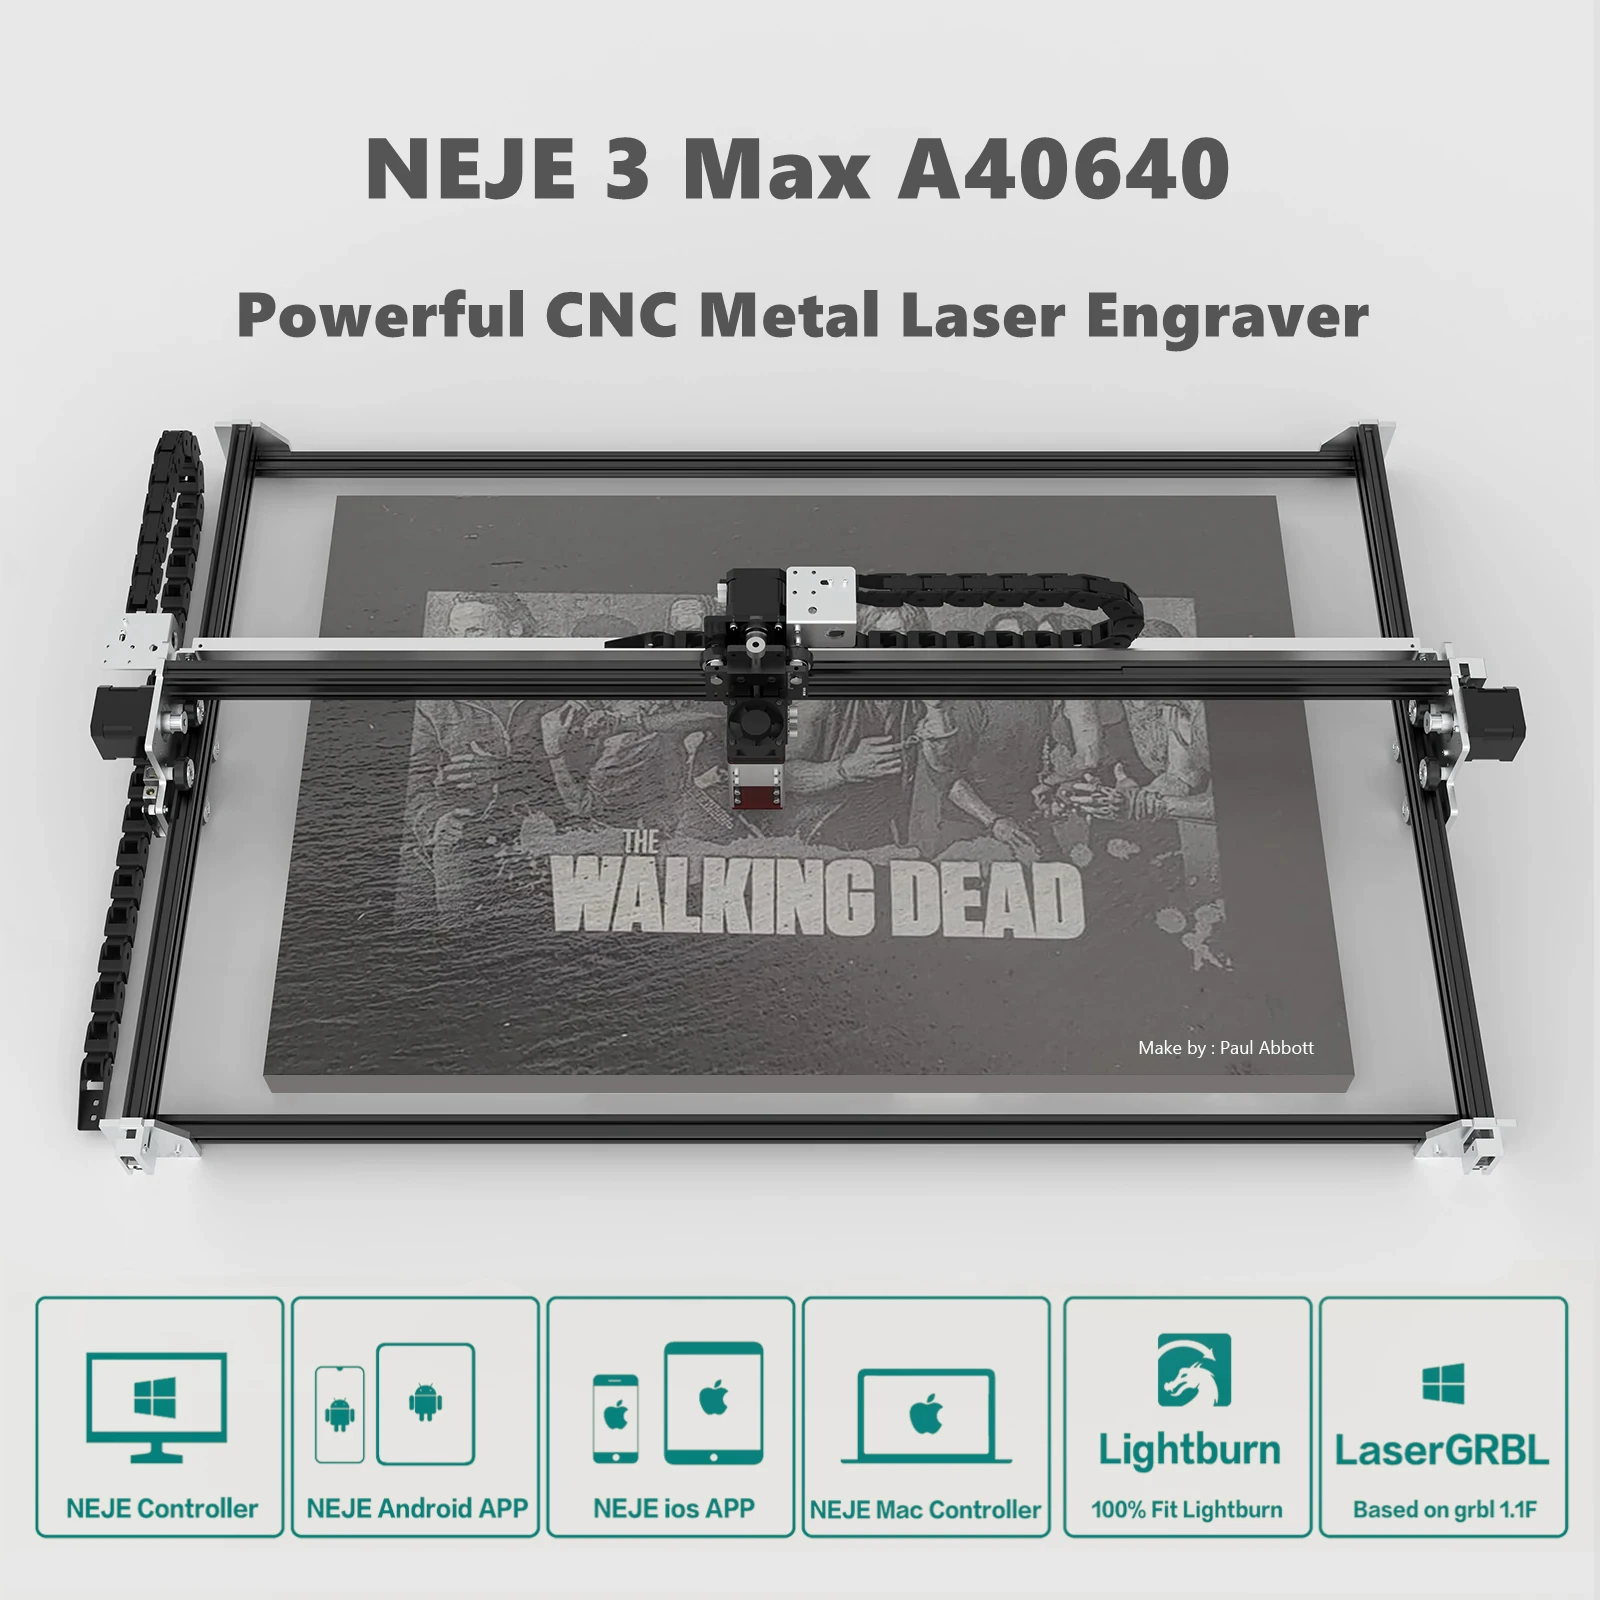 NEJE 3 Max A40640/E30130/N40630 CNC Laser Engraver Metal Engraving Machine Powerful 80W Laser Cutter Wood Cutting Print Tools